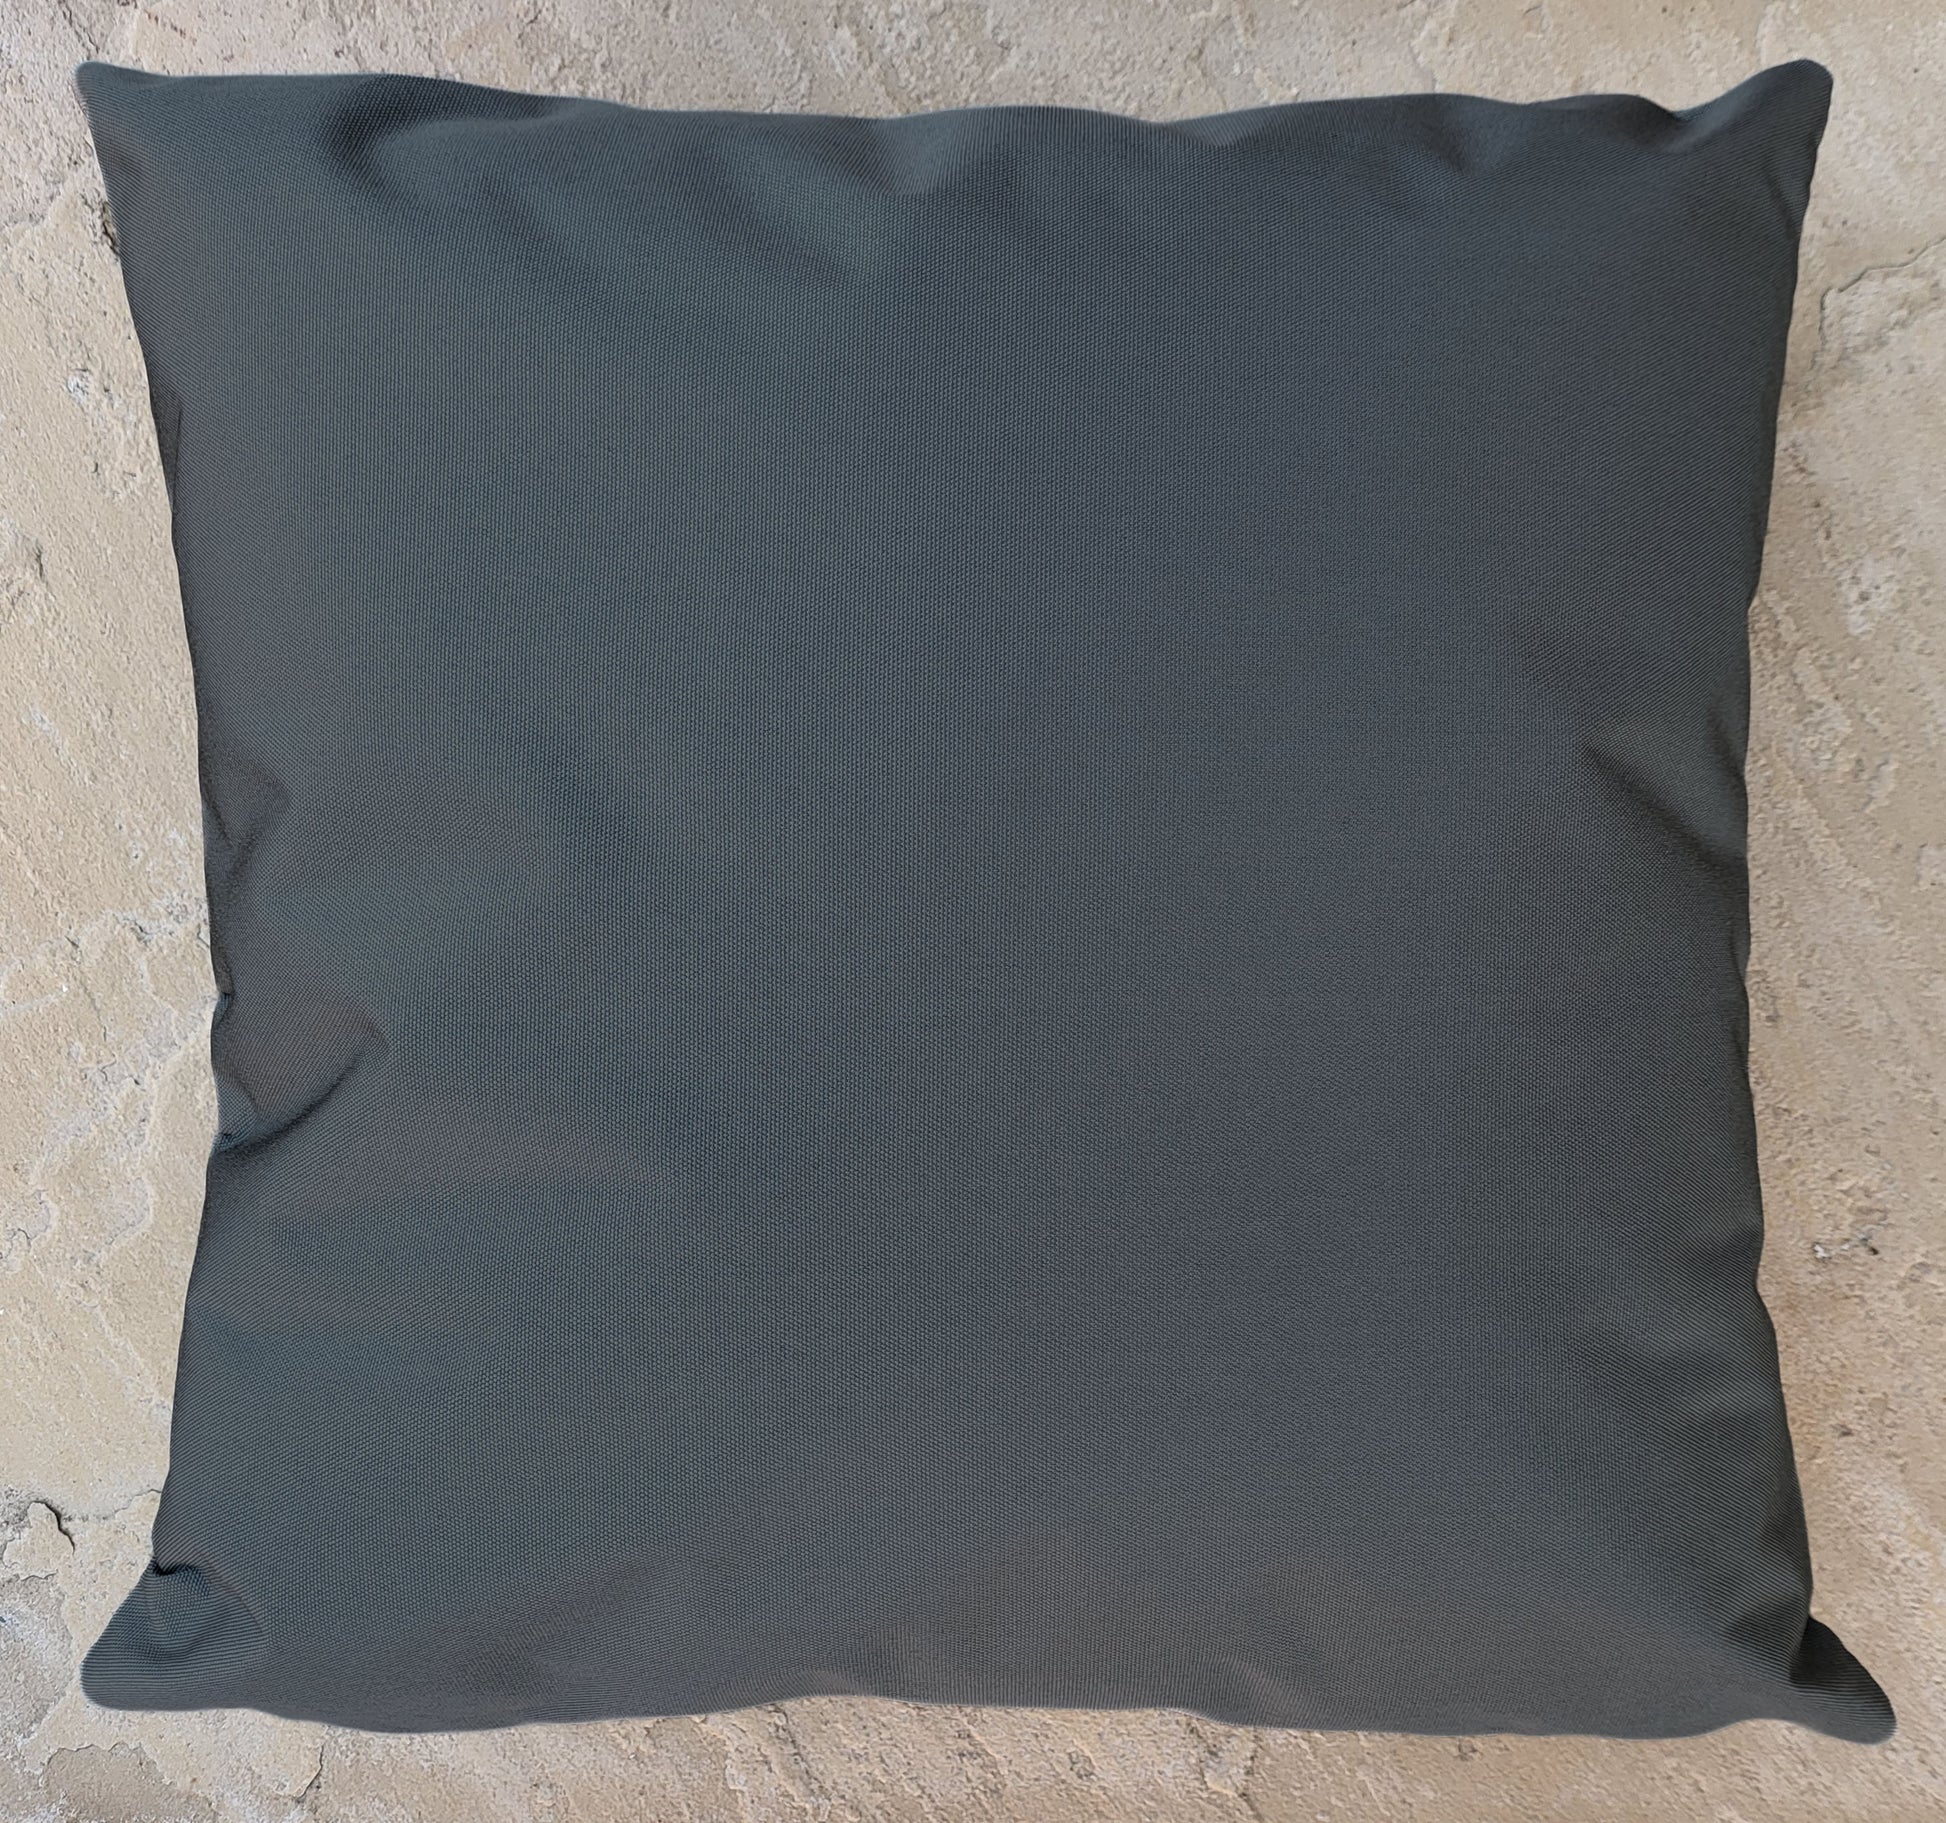 Outdoor Waterproof Garden Rattan Chair Cushions Or Covers Grey